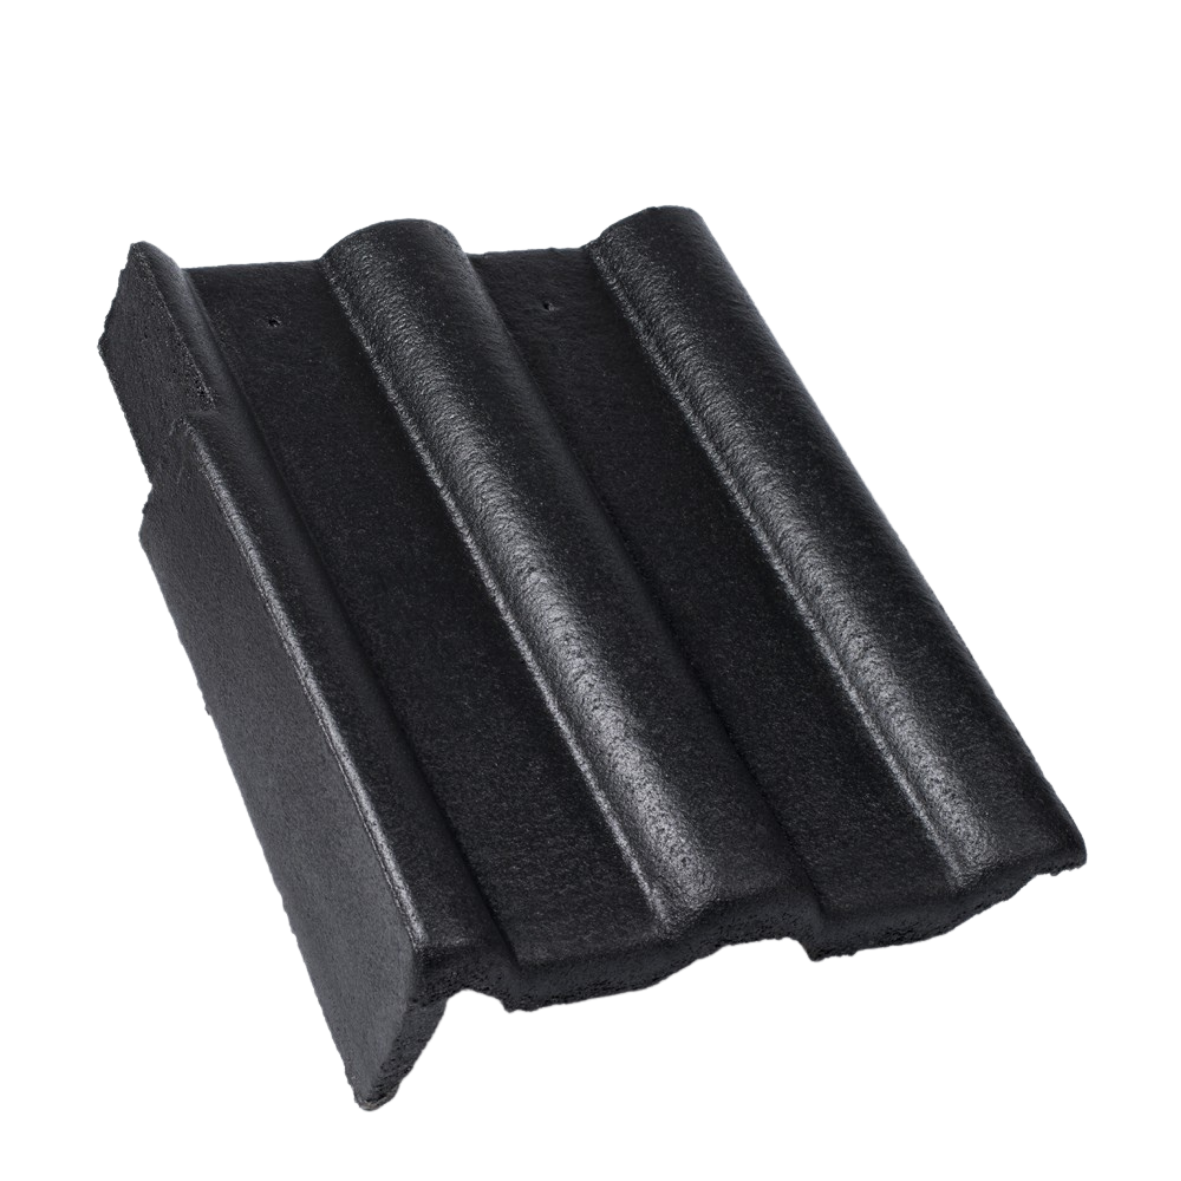 Tigla beton si accesorii - Tigla laterala de stanga Nova negru 420 x 330 mm, https:maxbau.ro